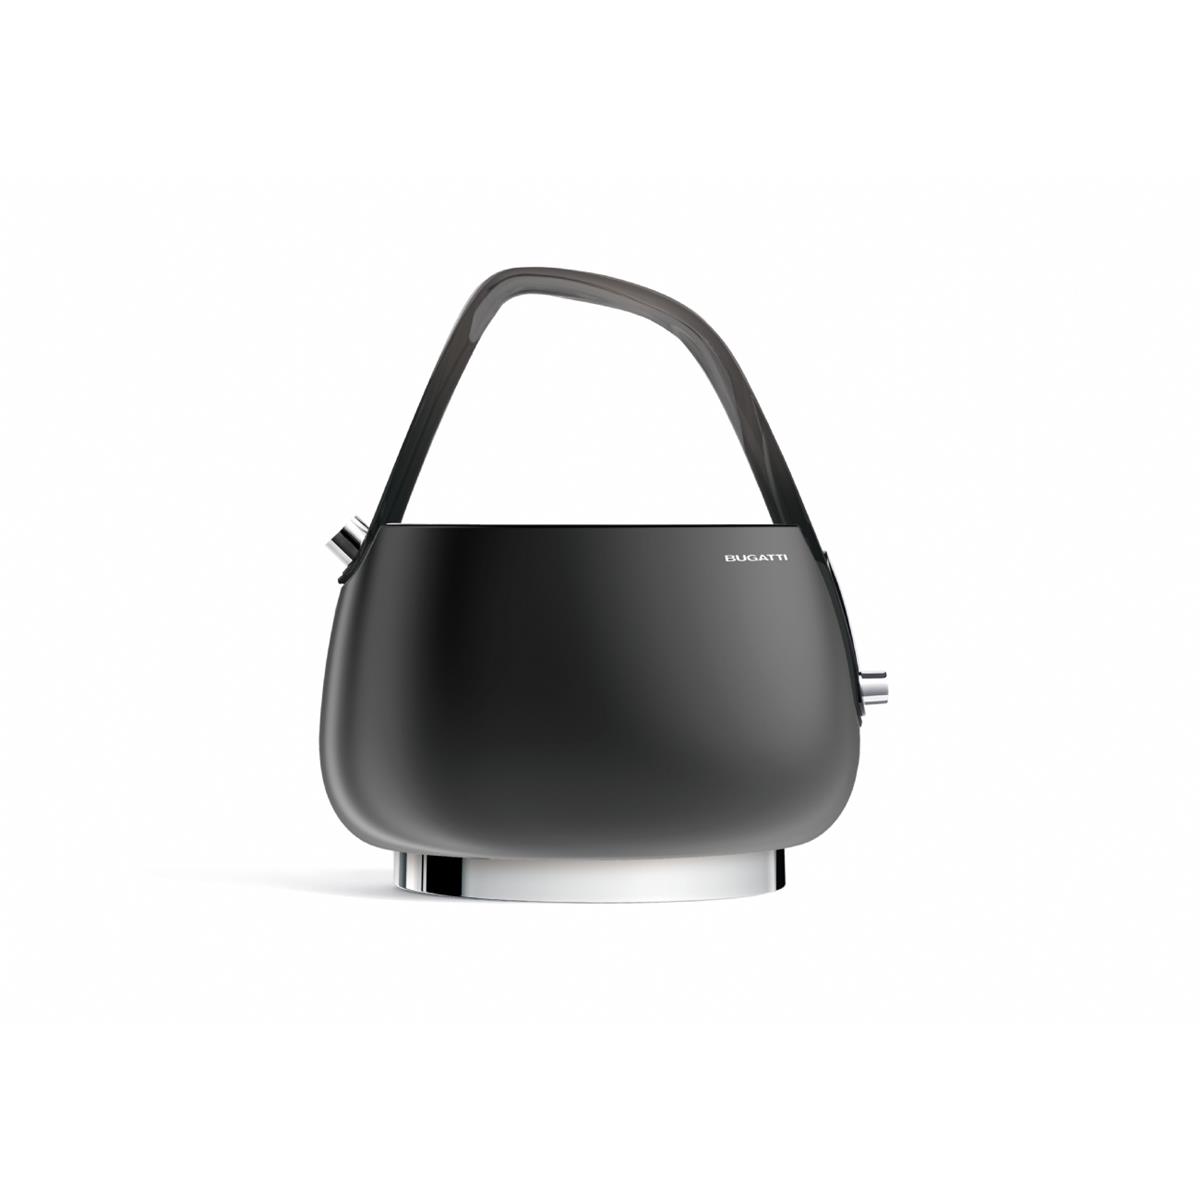 Bugatti - JACKIE - Matt Black electronic kettle with transparent smoked handle